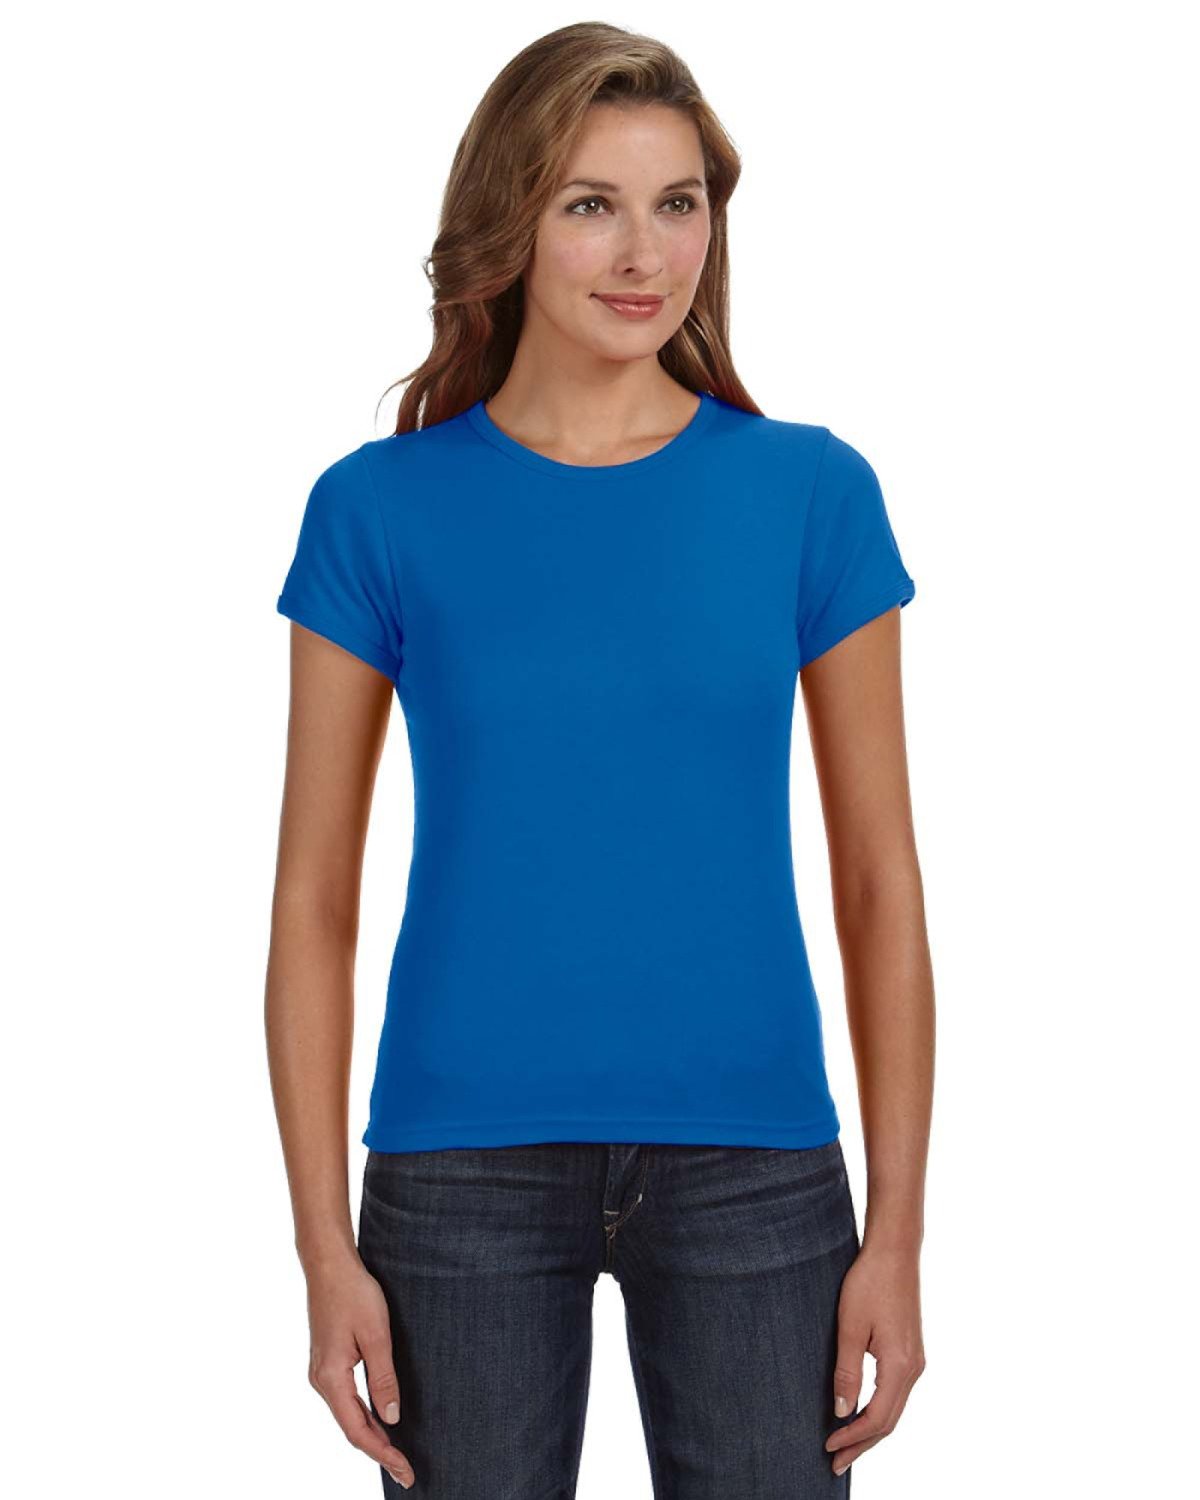 Anvil Ladies' 1x1 Baby Rib Scoop T-Shirt ROYAL BLUE 